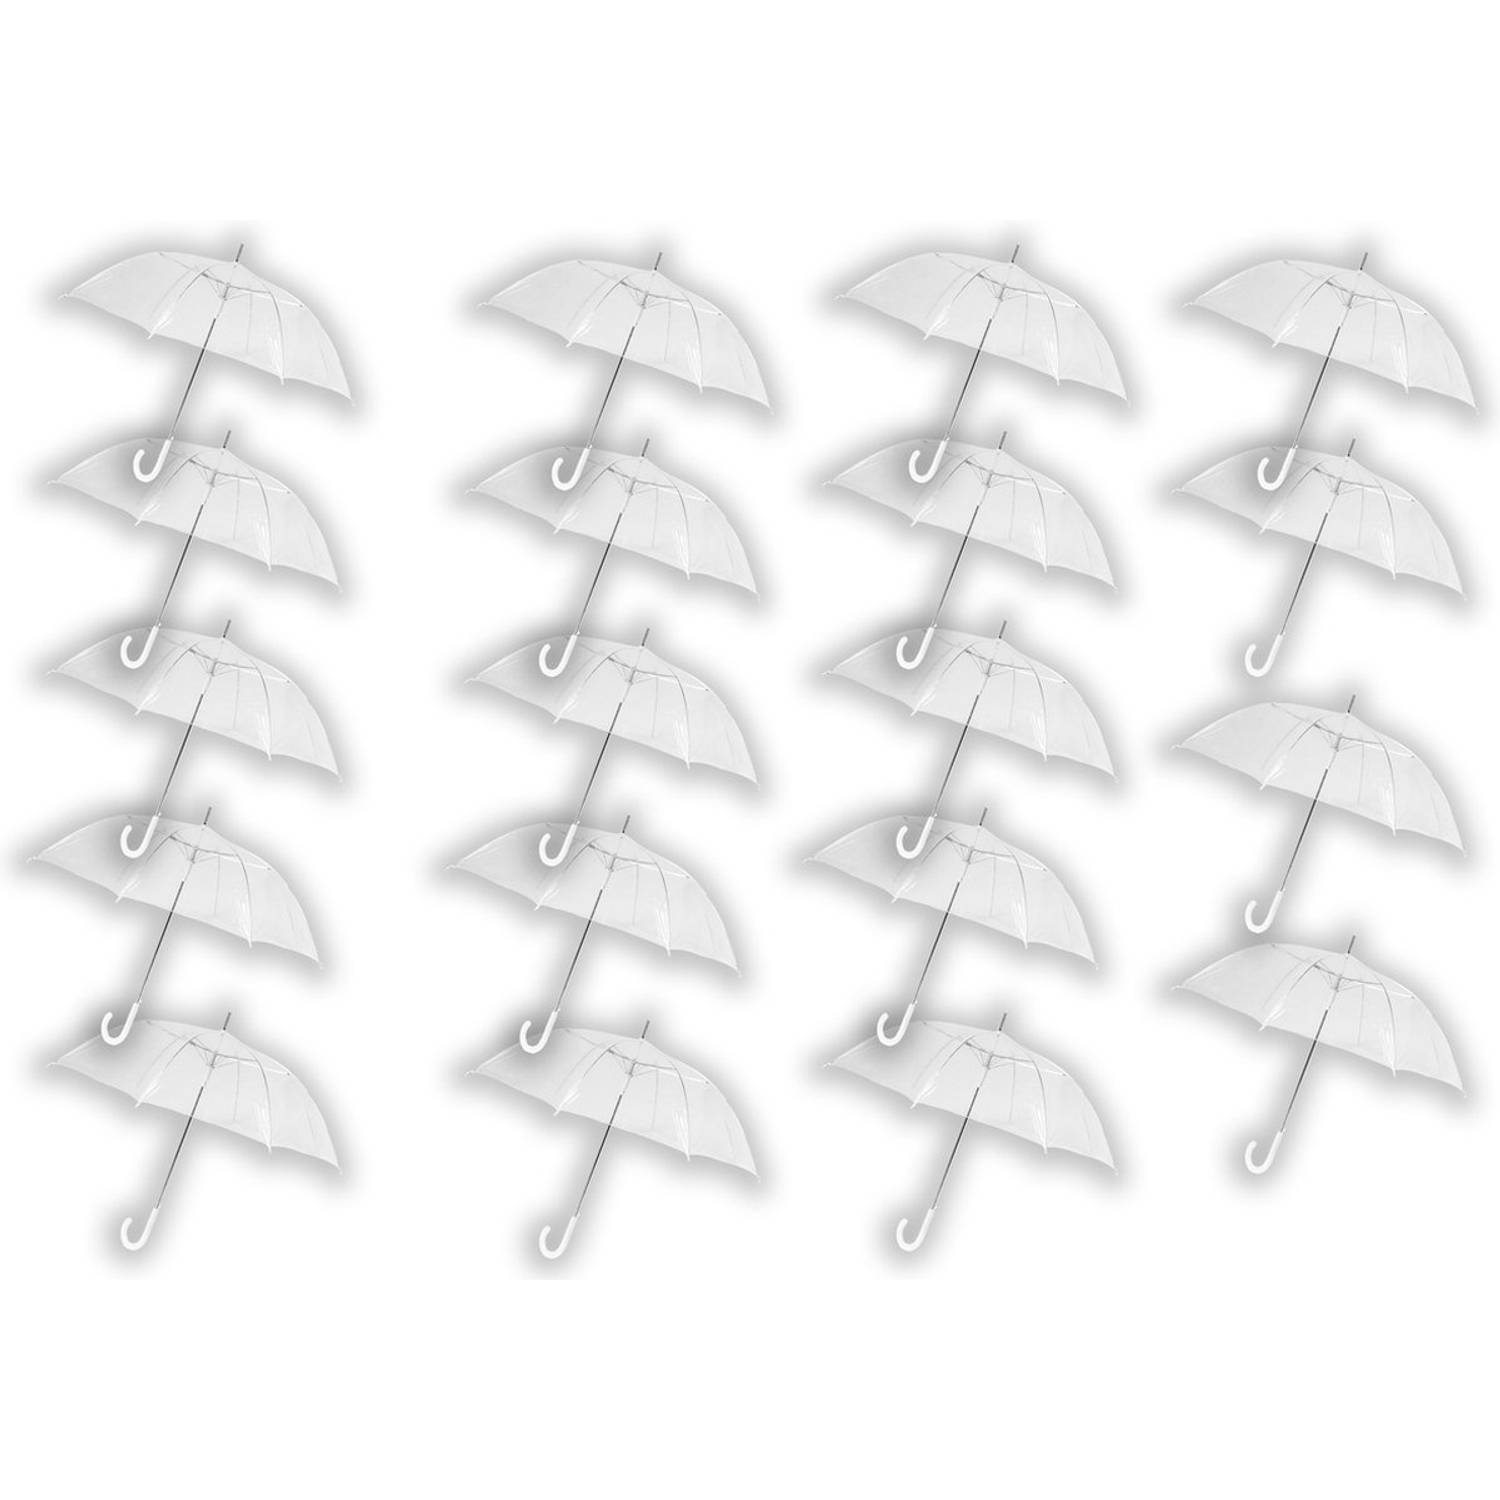 19 stuks Paraplu transparant plastic paraplu's 100 cm - doorzichtige paraplu - trouwparaplu - bruidsparaplu - stijlvol - bruiloft - trouwen - fashionable - trouwparaplu